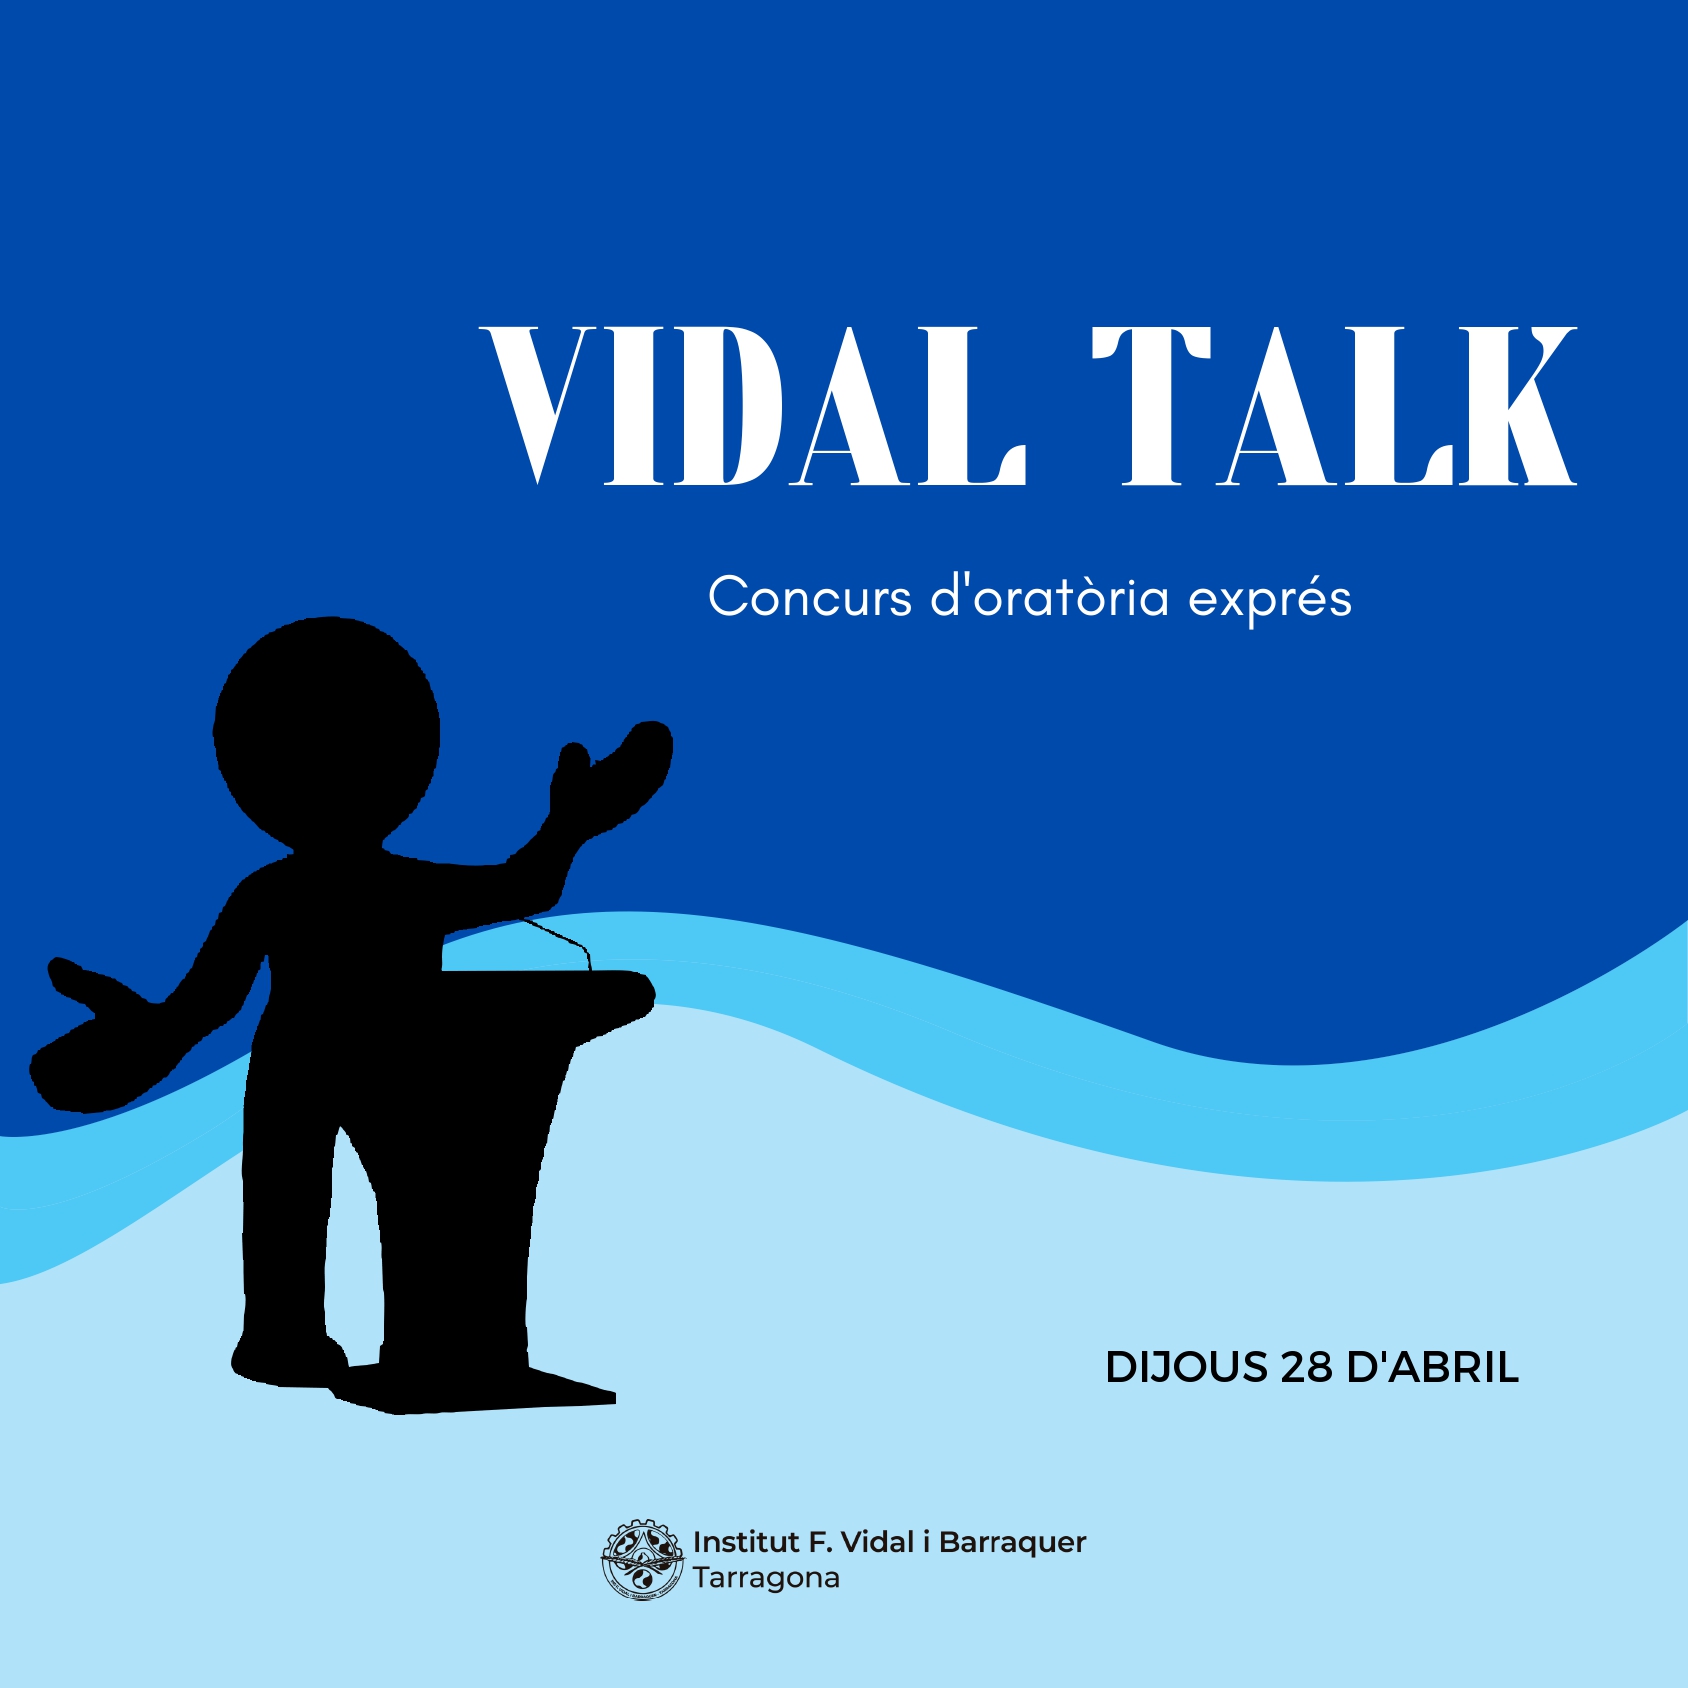 1r concurs Vidal Talk